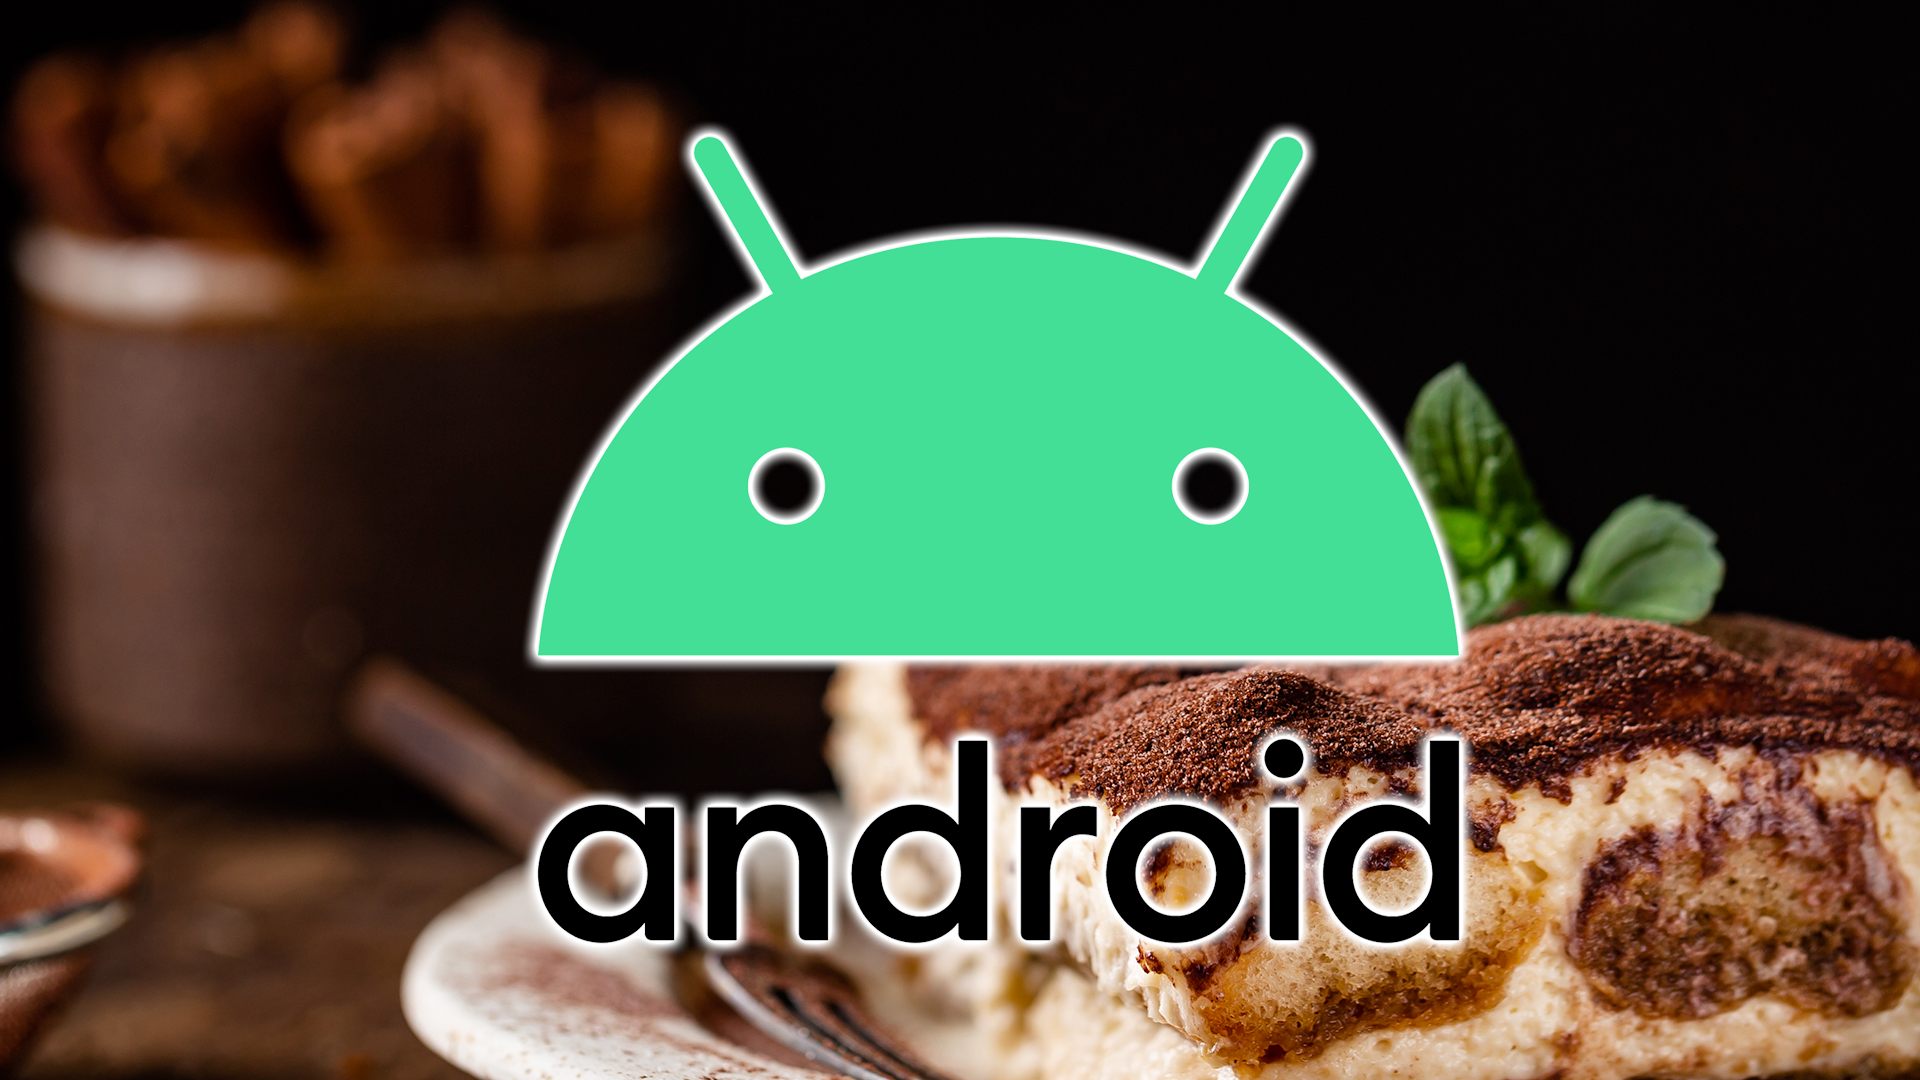 The Android logo over a plate of tiramisu.